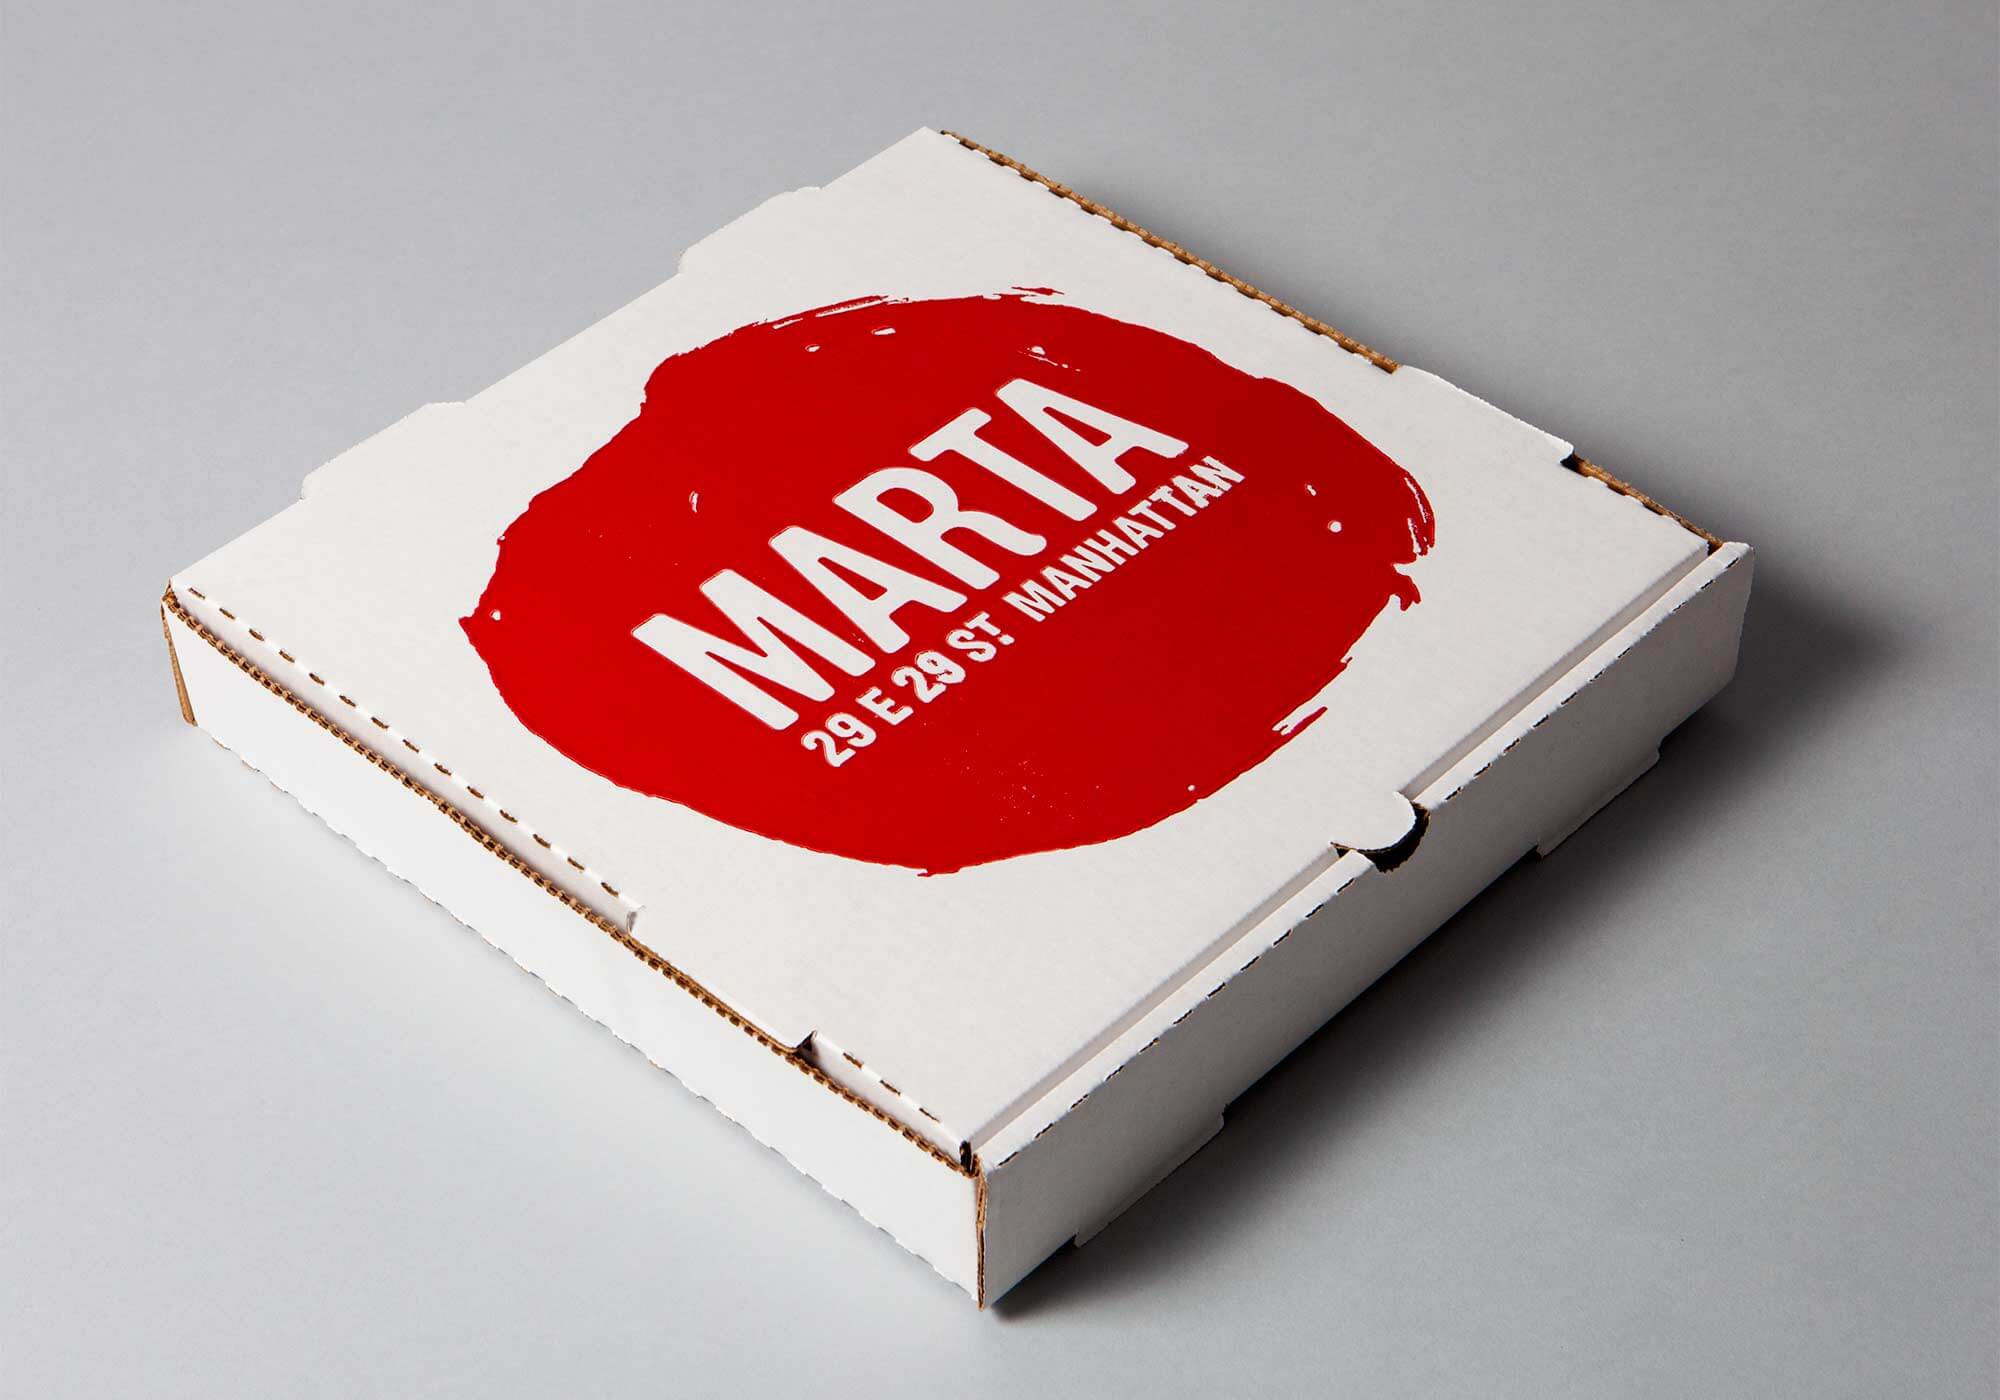 marta-pizzabox-1-2000x1400